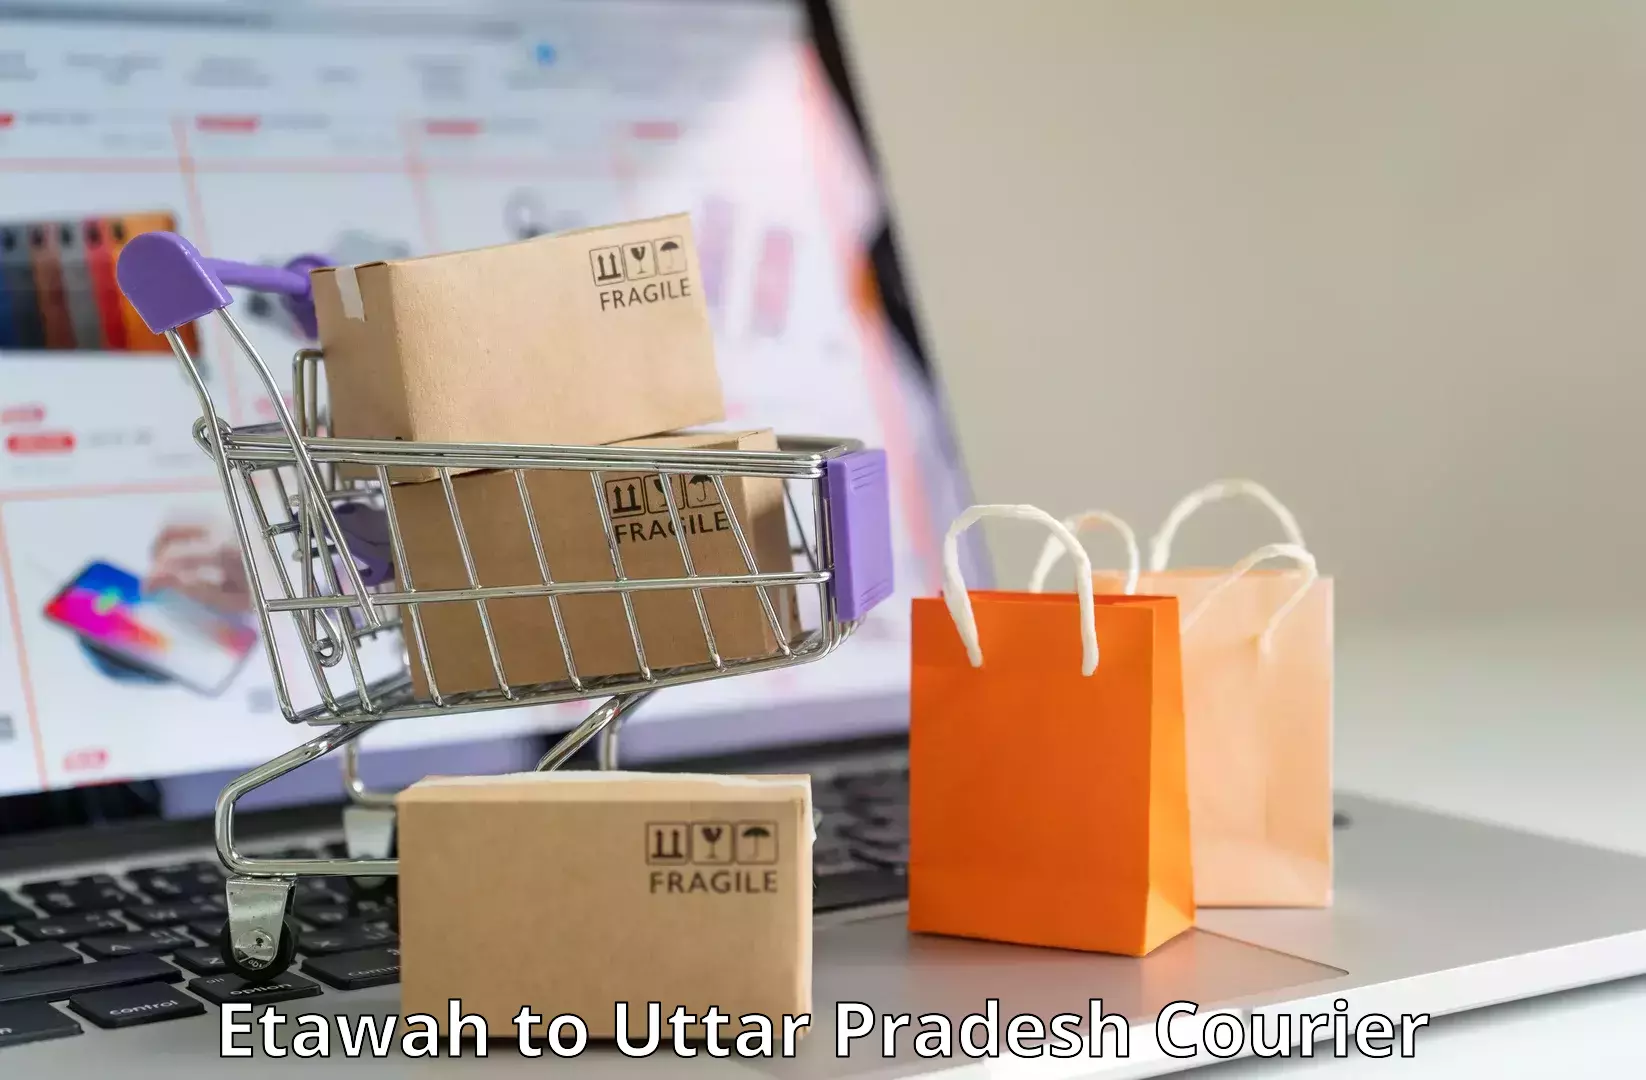 High-speed parcel service Etawah to Vrindavan